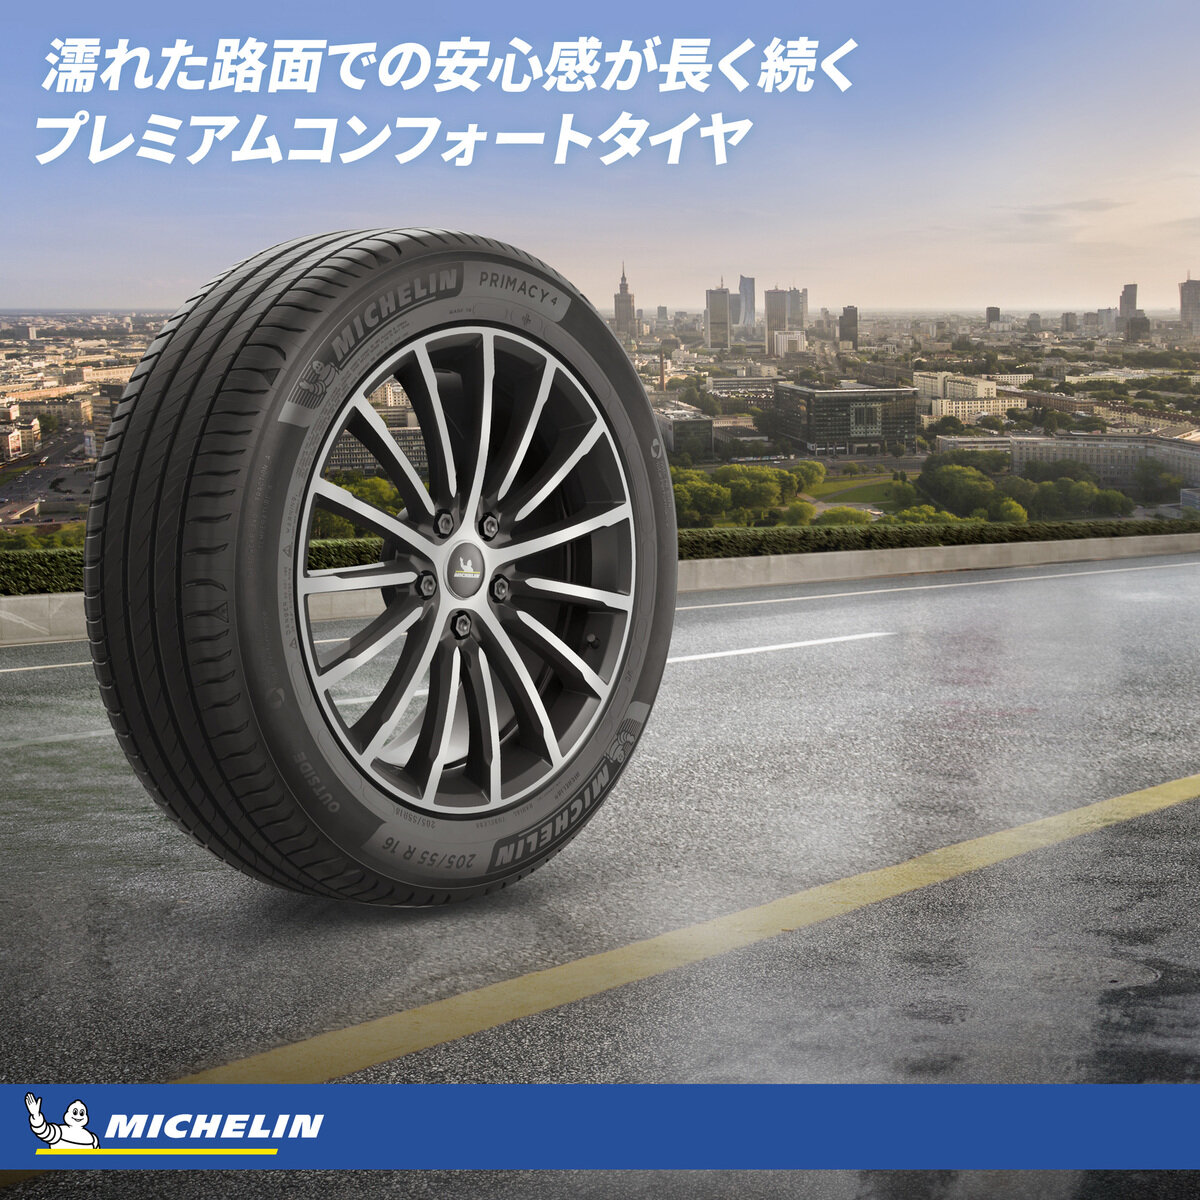 Michelin 225/55 R17 101W XL TL PRIMACY 4+ MI | Costco Japan